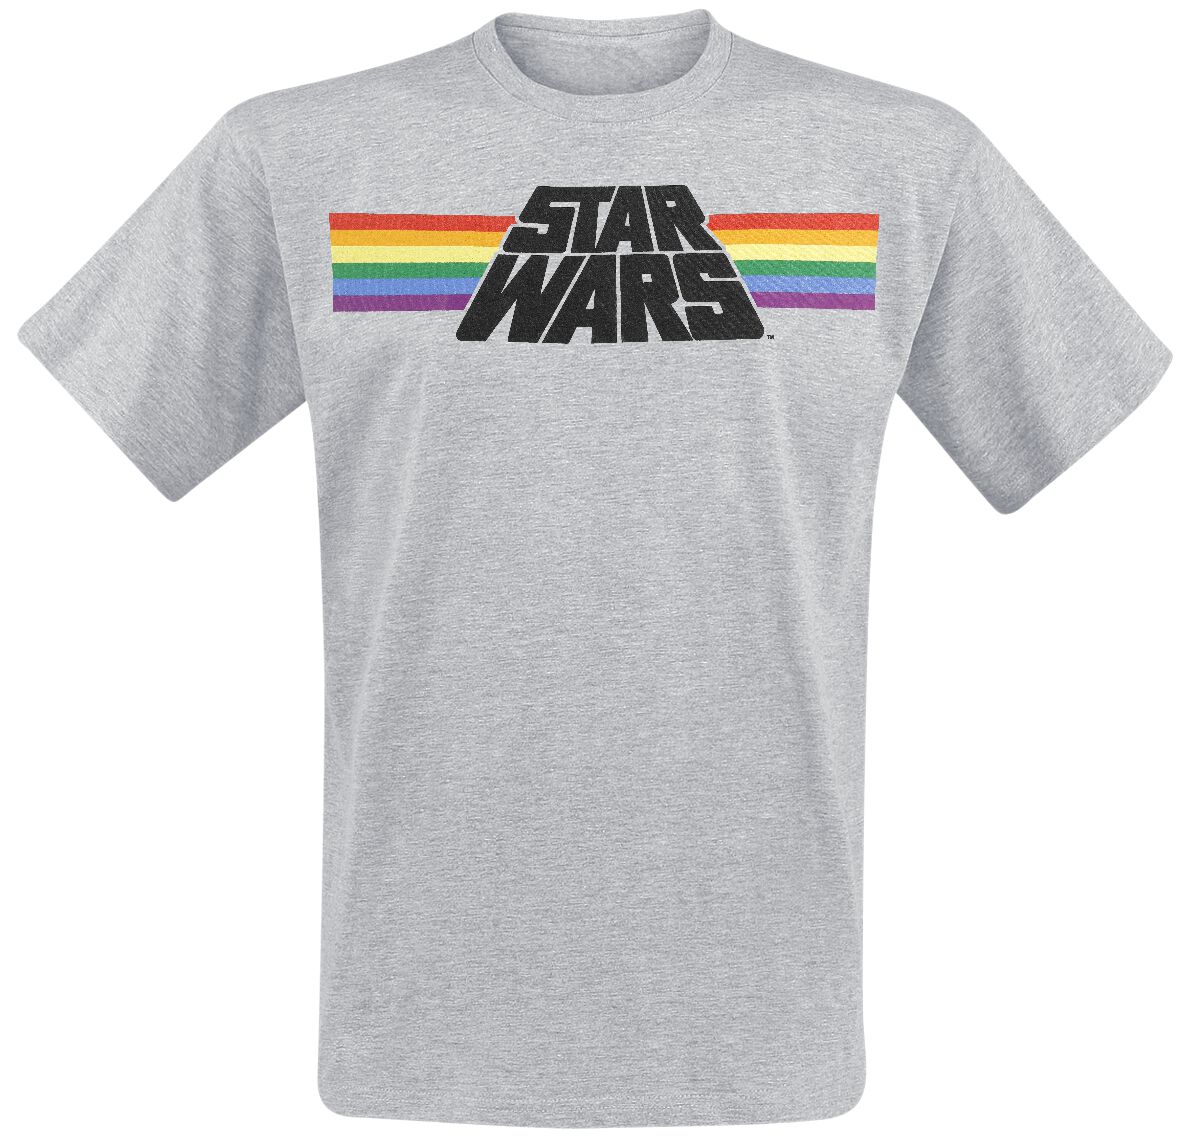 Star Wars Classic Rainbow T-Shirt grau meliert in XL